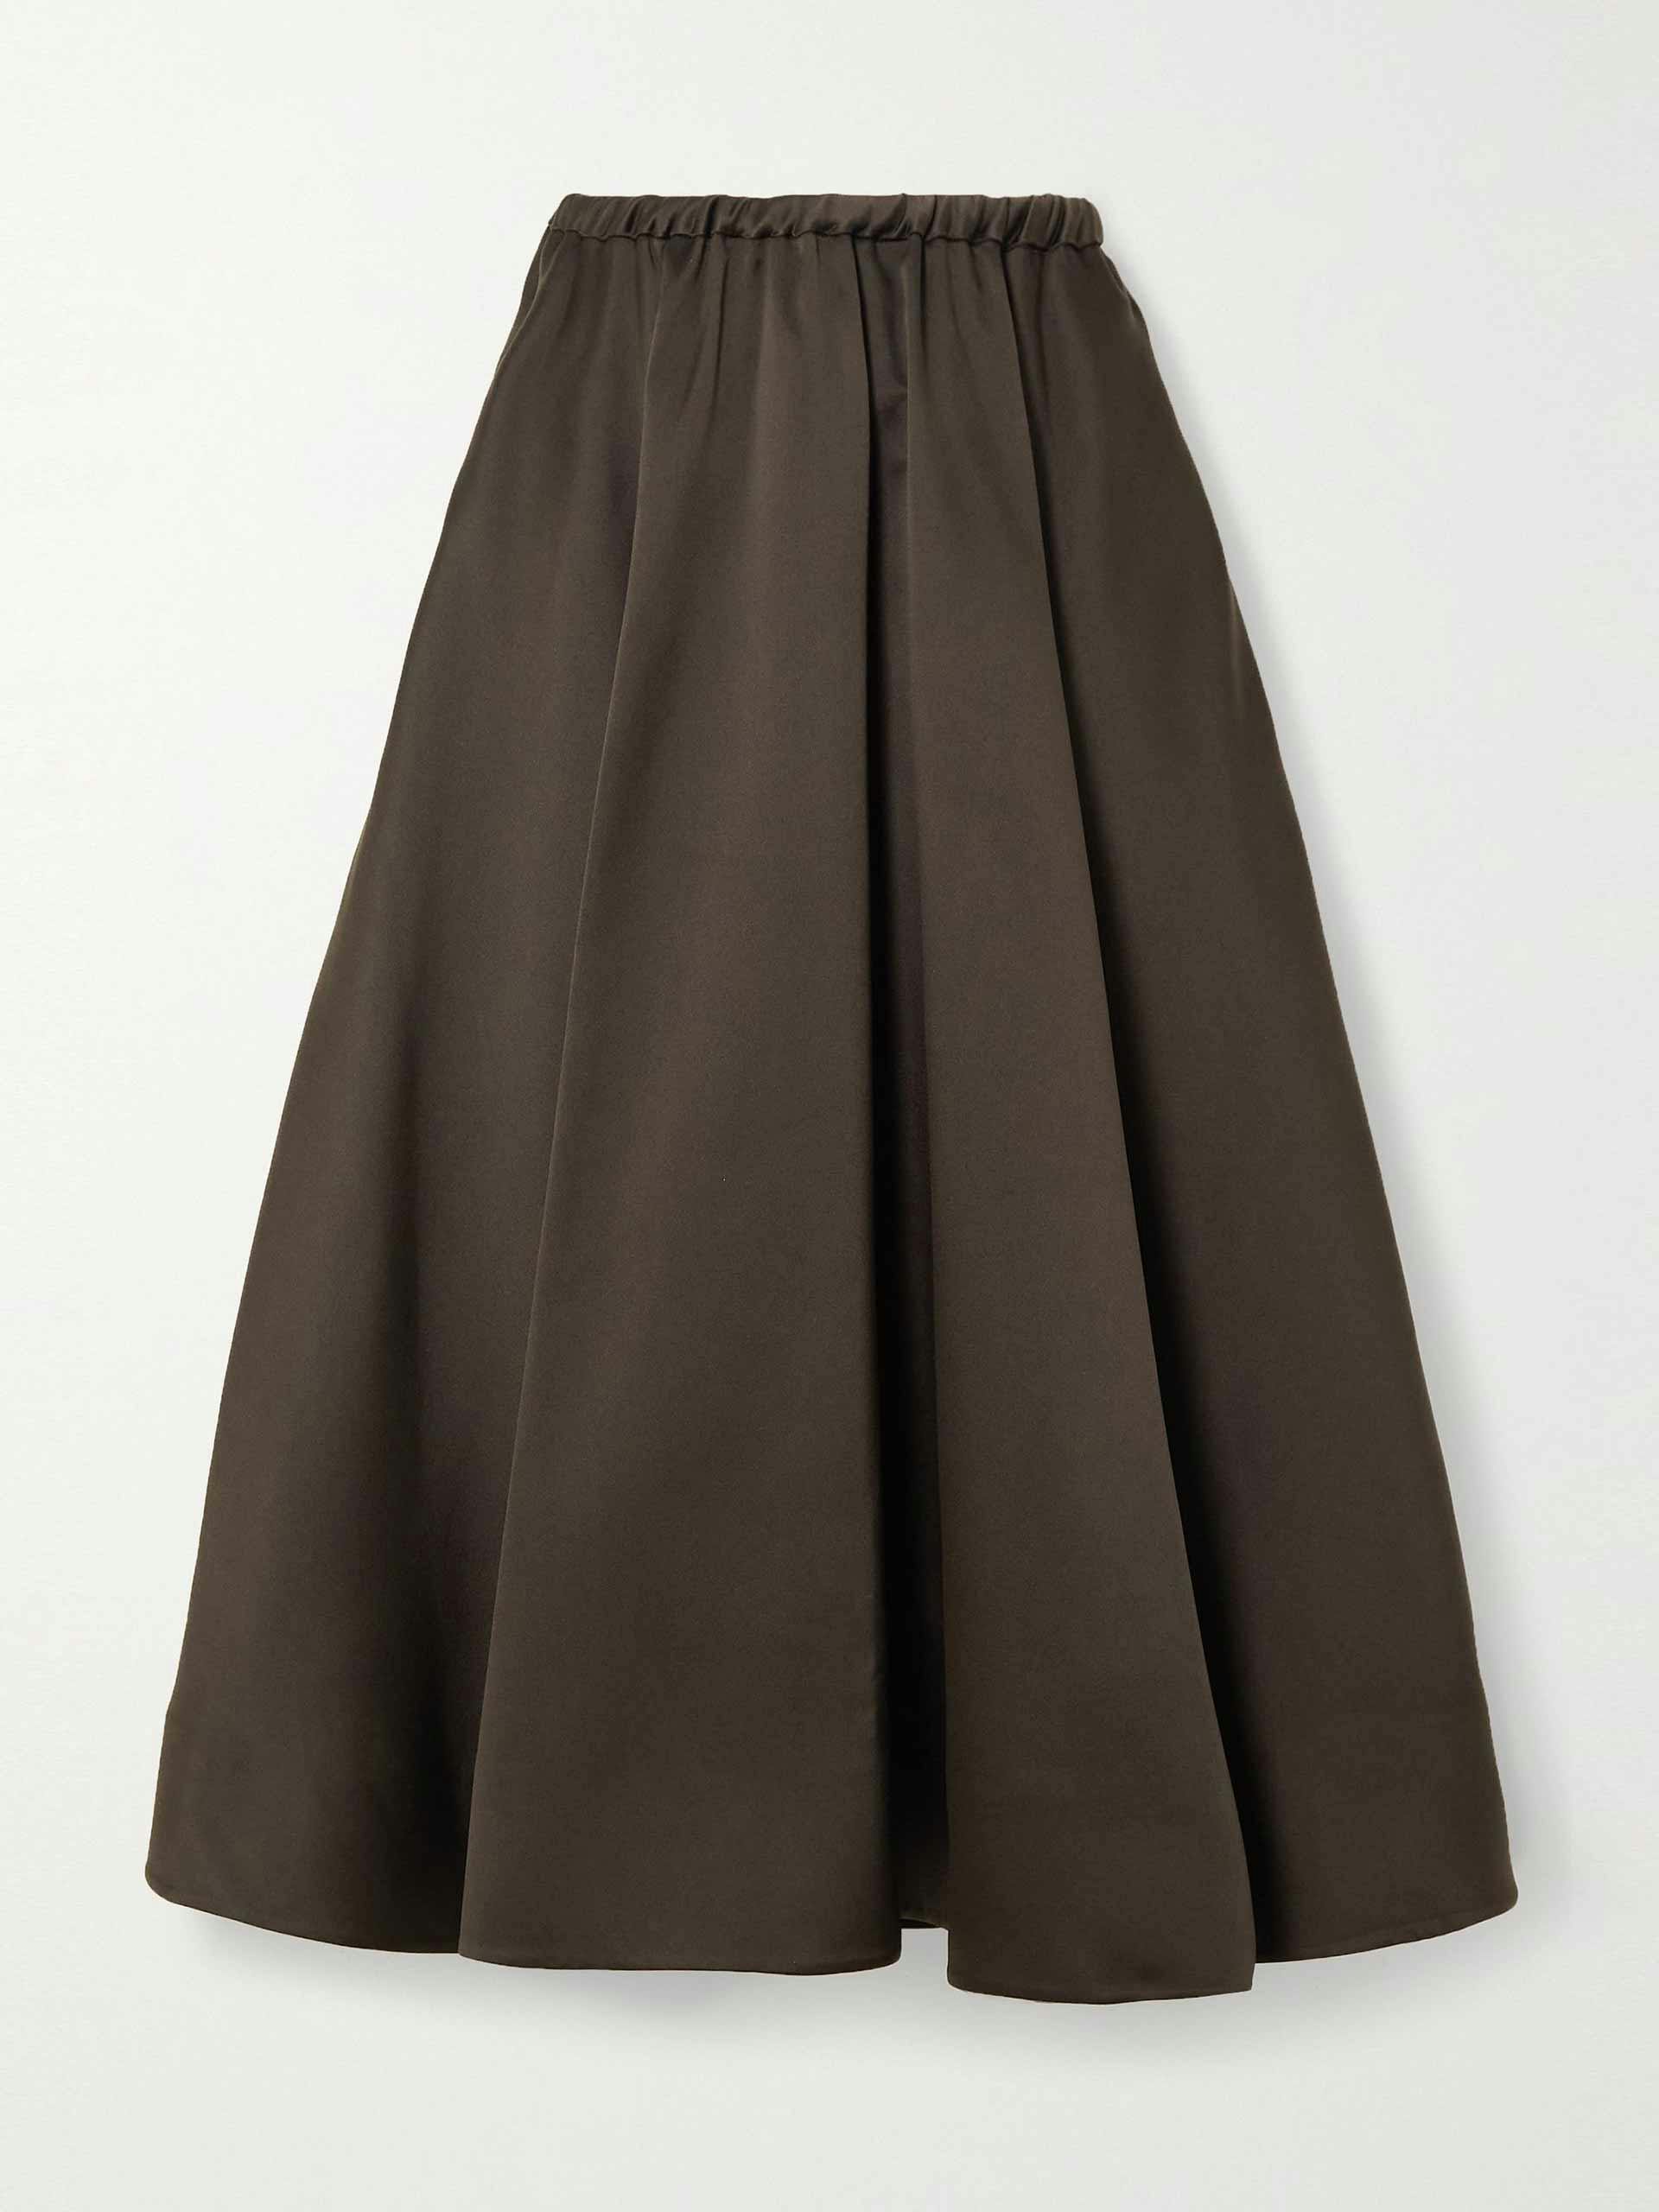 Duchesse satin brown midi skirt